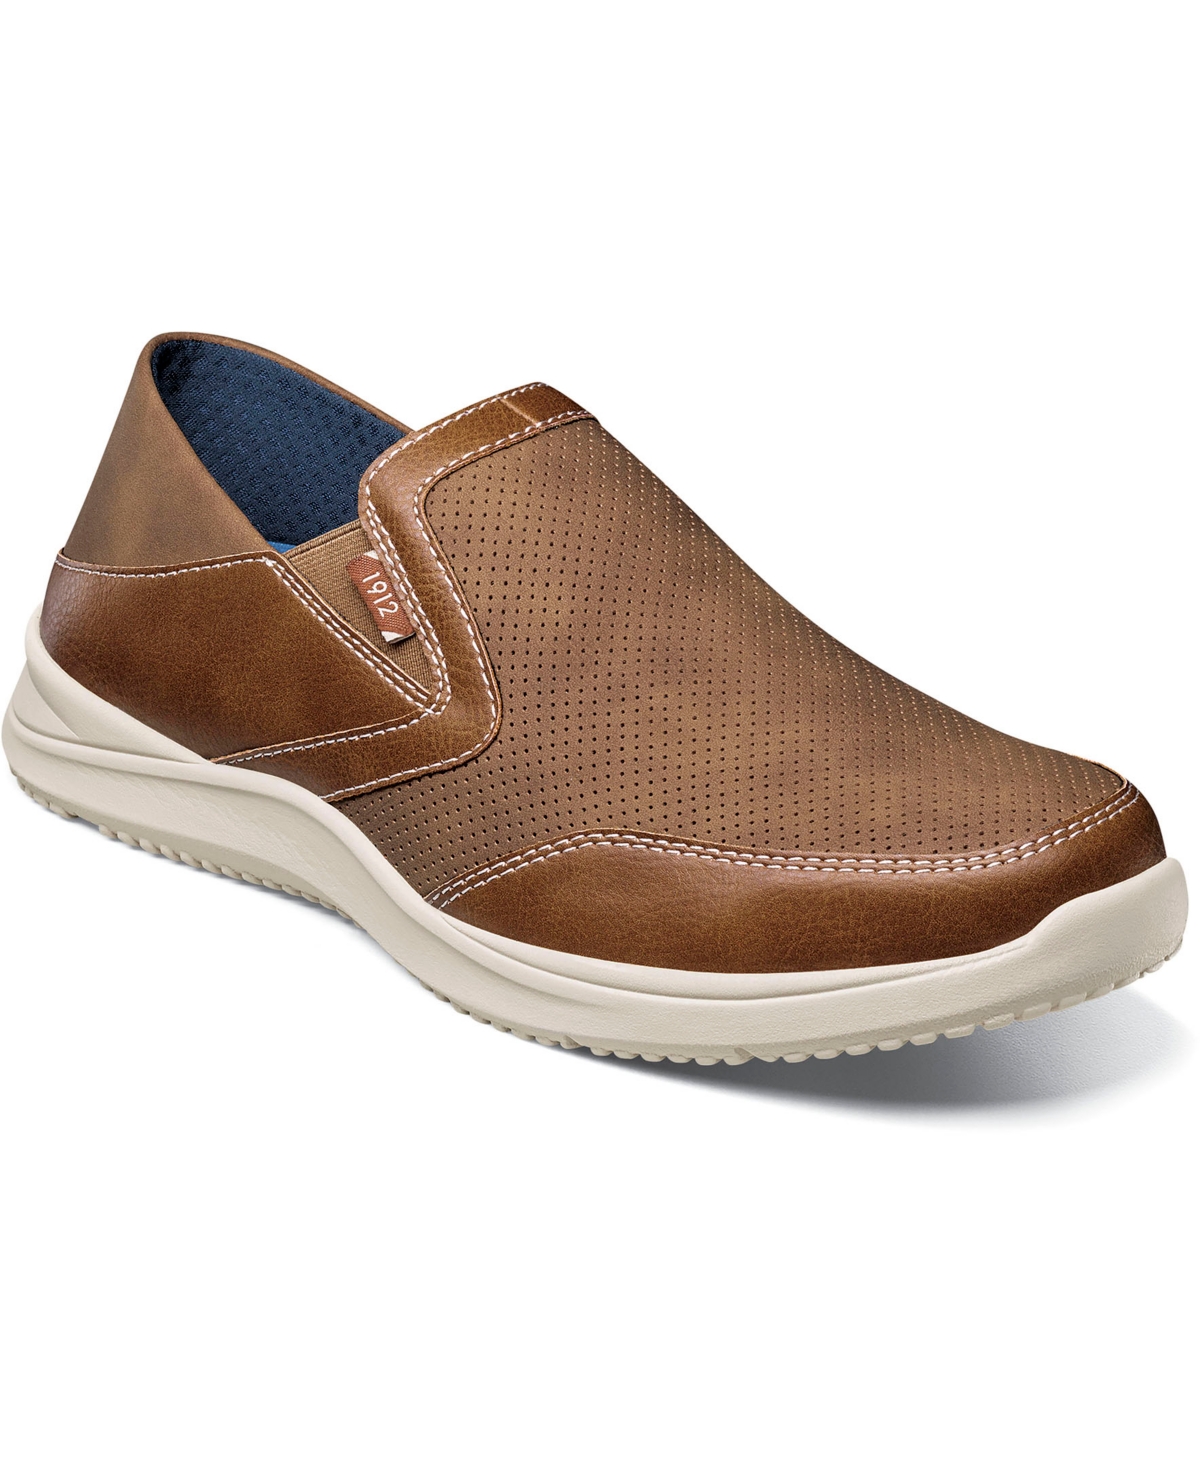 Men's Conway Ez Moc Toe Slip On Shoes - Navy Multi